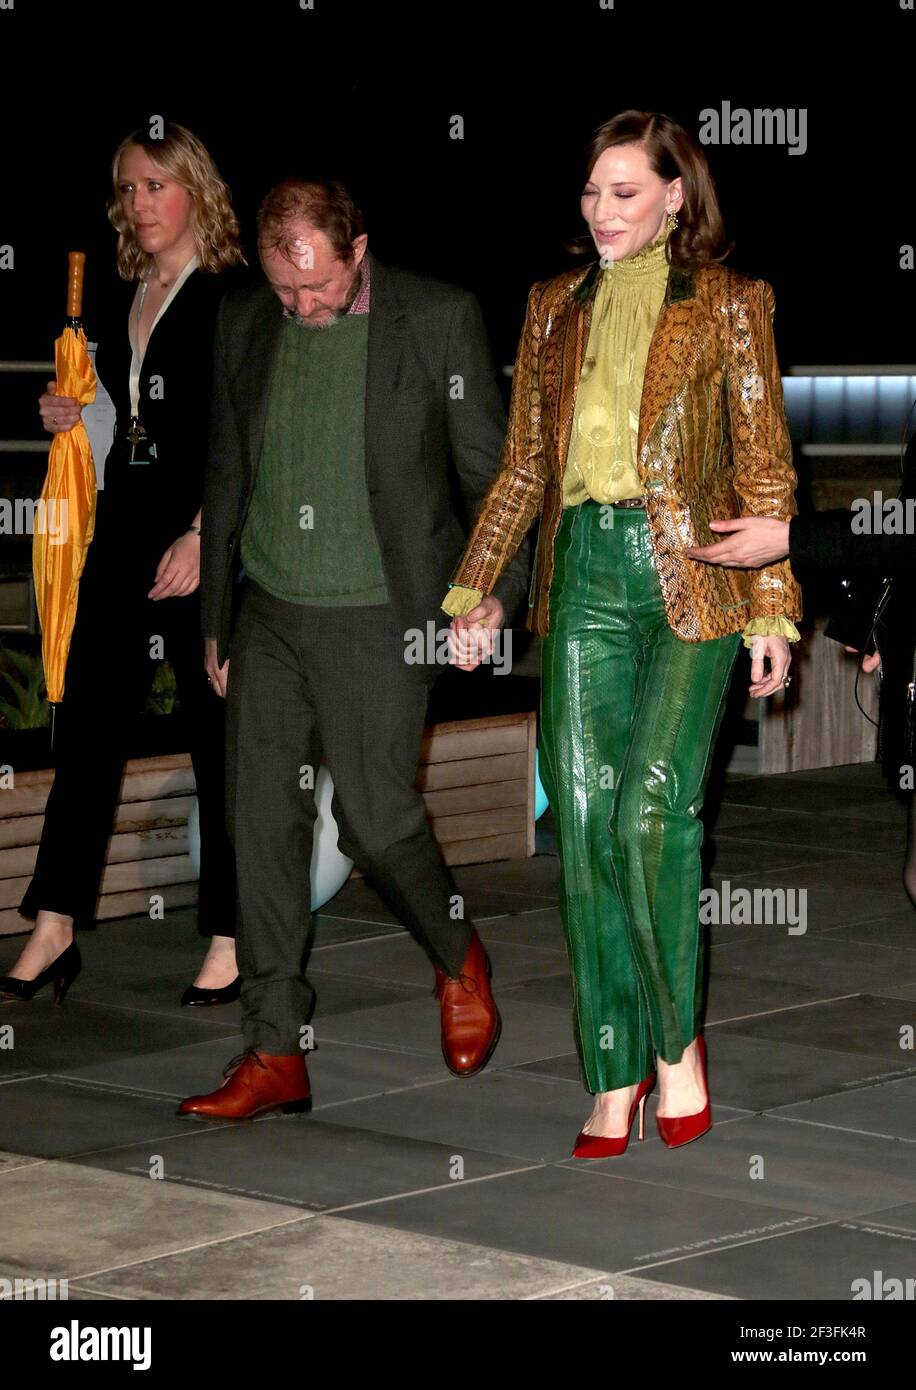 05 marzo 2019 - Londra, Inghilterra, Regno Unito - The National Theatre's Up Next Gala Photo Shows: Cate Blanchett e Andrew Upton Foto Stock